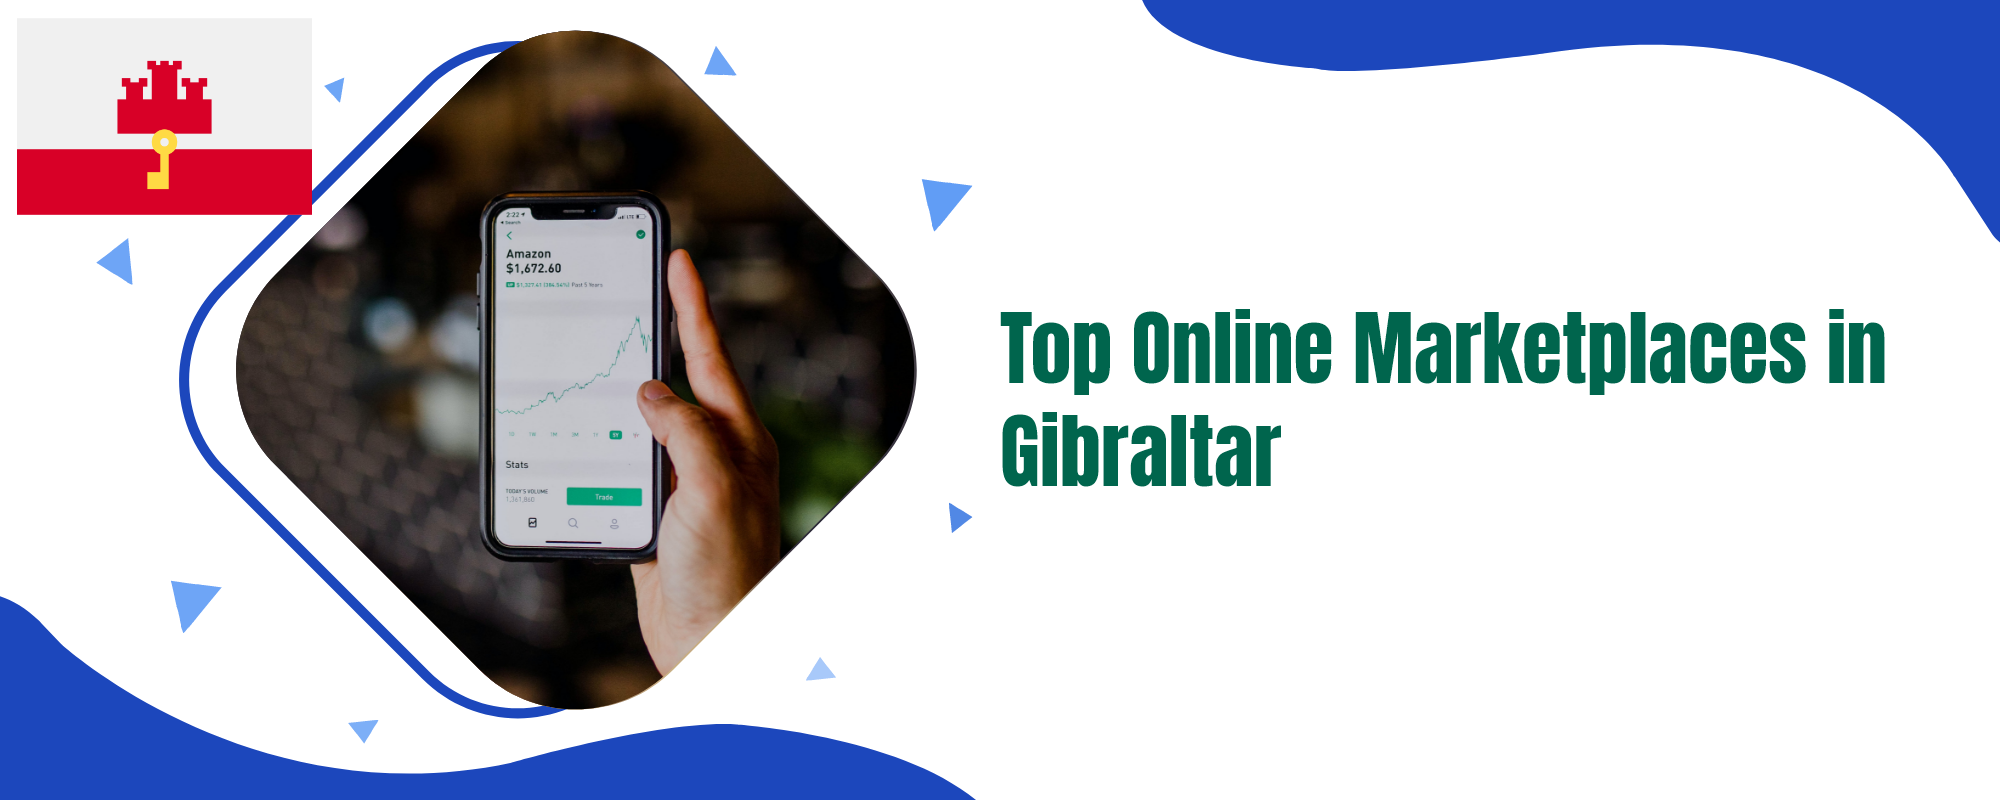 Online marketplaces in Gibraltar